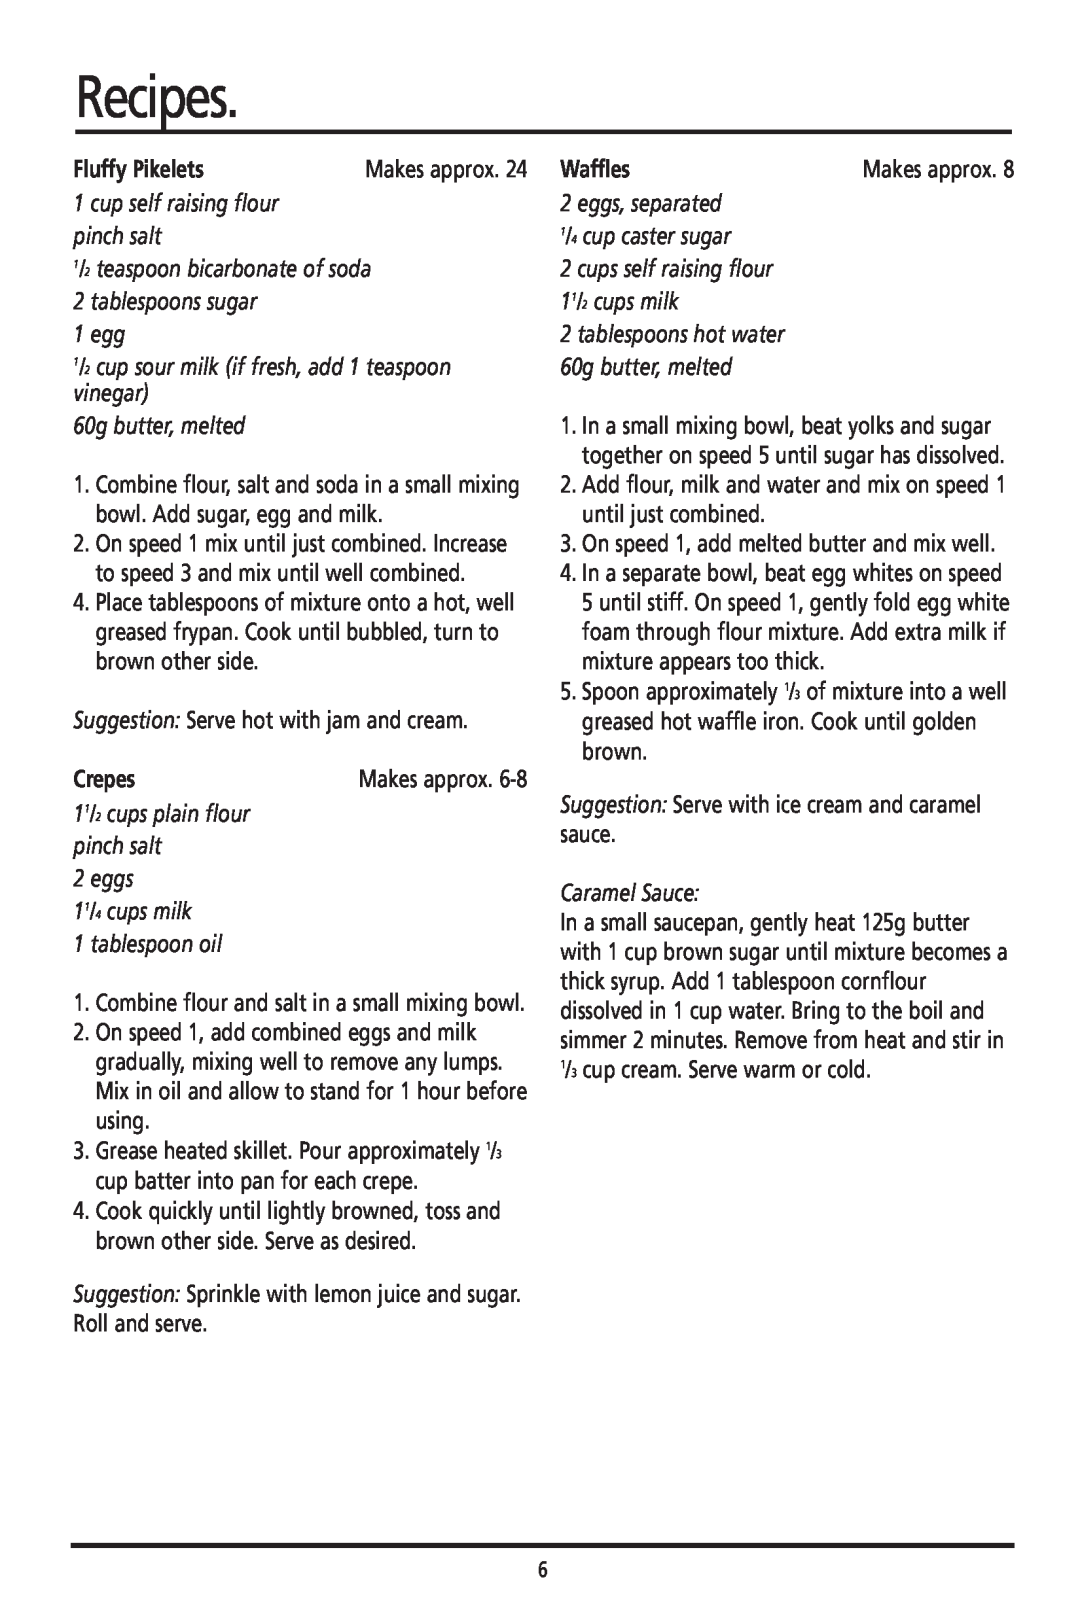 Sunbeam JM3200 manual Recipes, Fluffy Pikelets, cup self raising flour pinch salt 1/2 teaspoon bicarbonate of soda, Crepes 